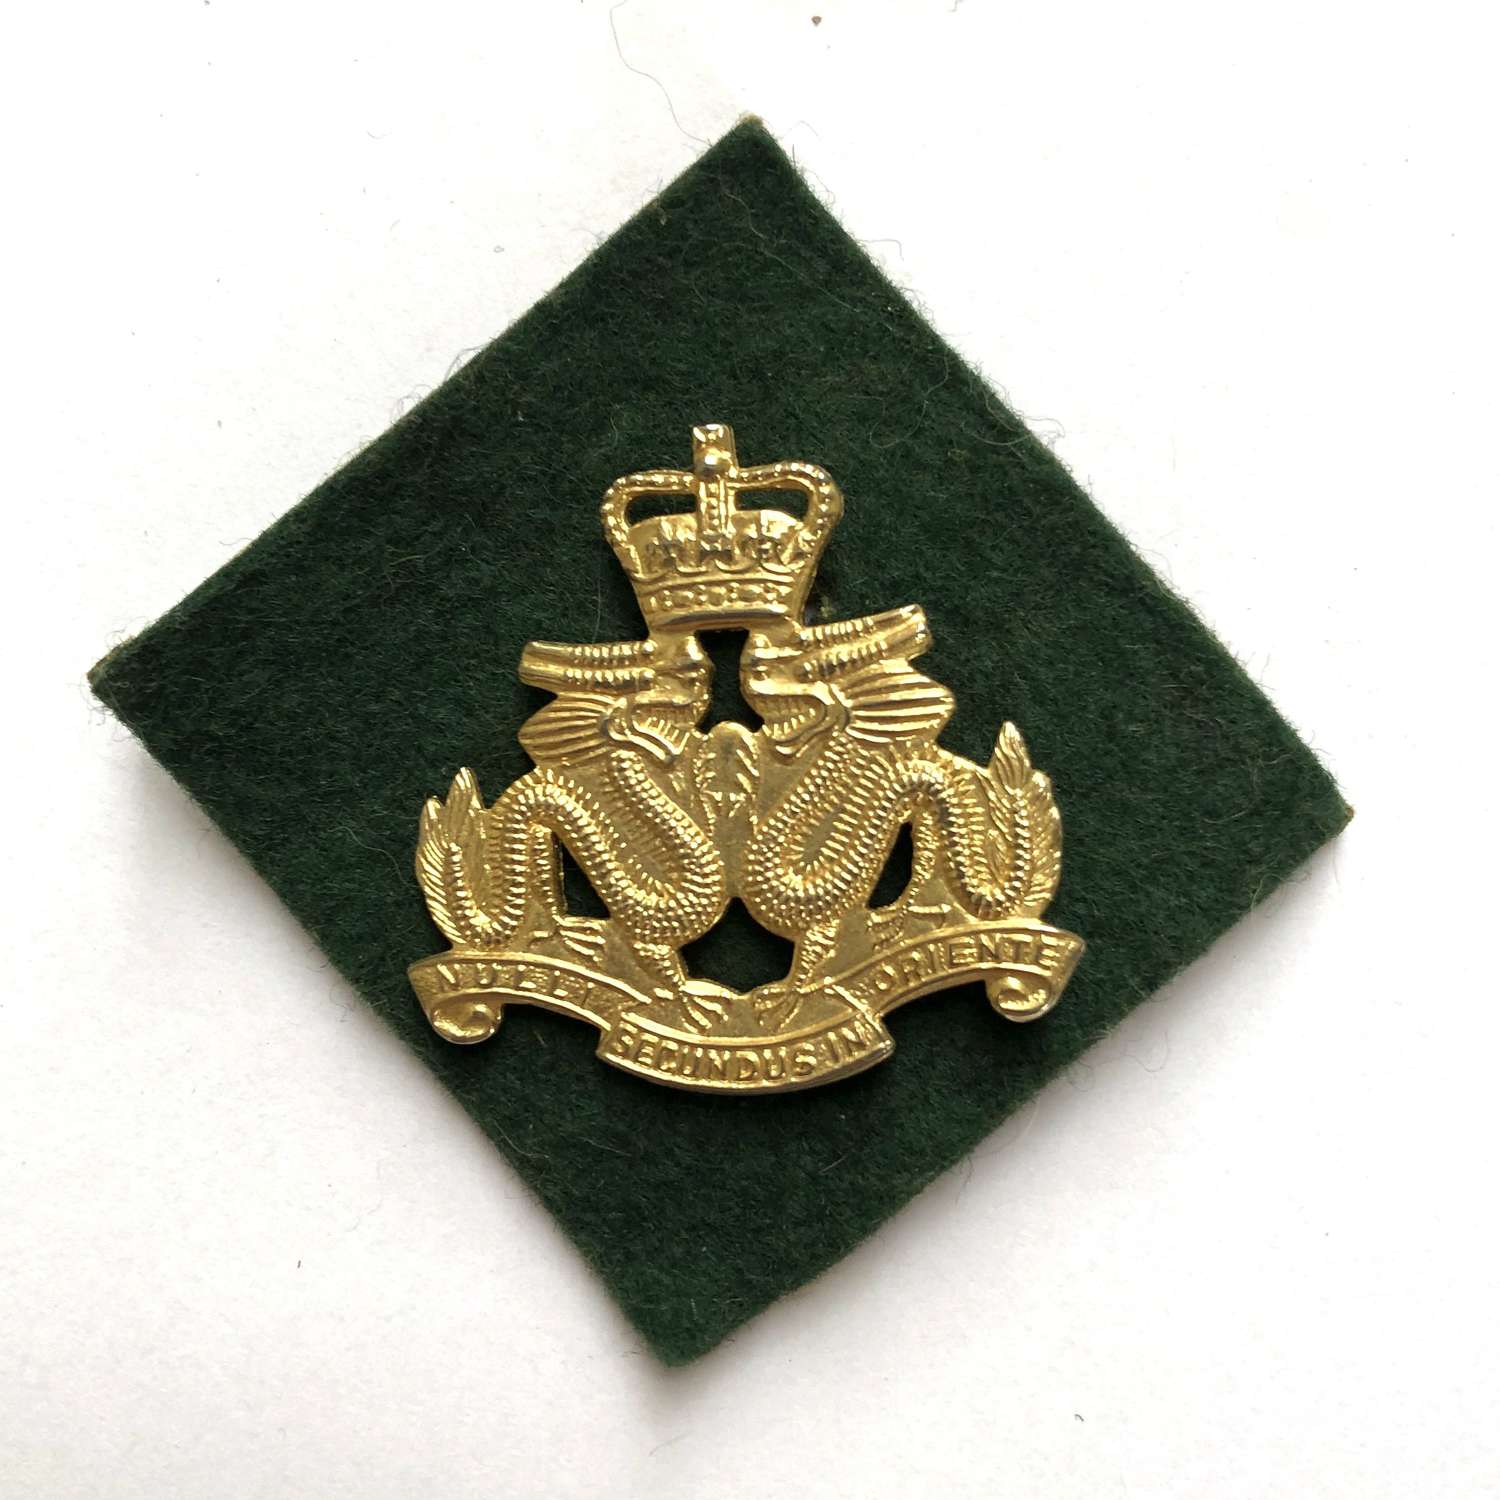 Hong Kong Regiment cap badge on green backing